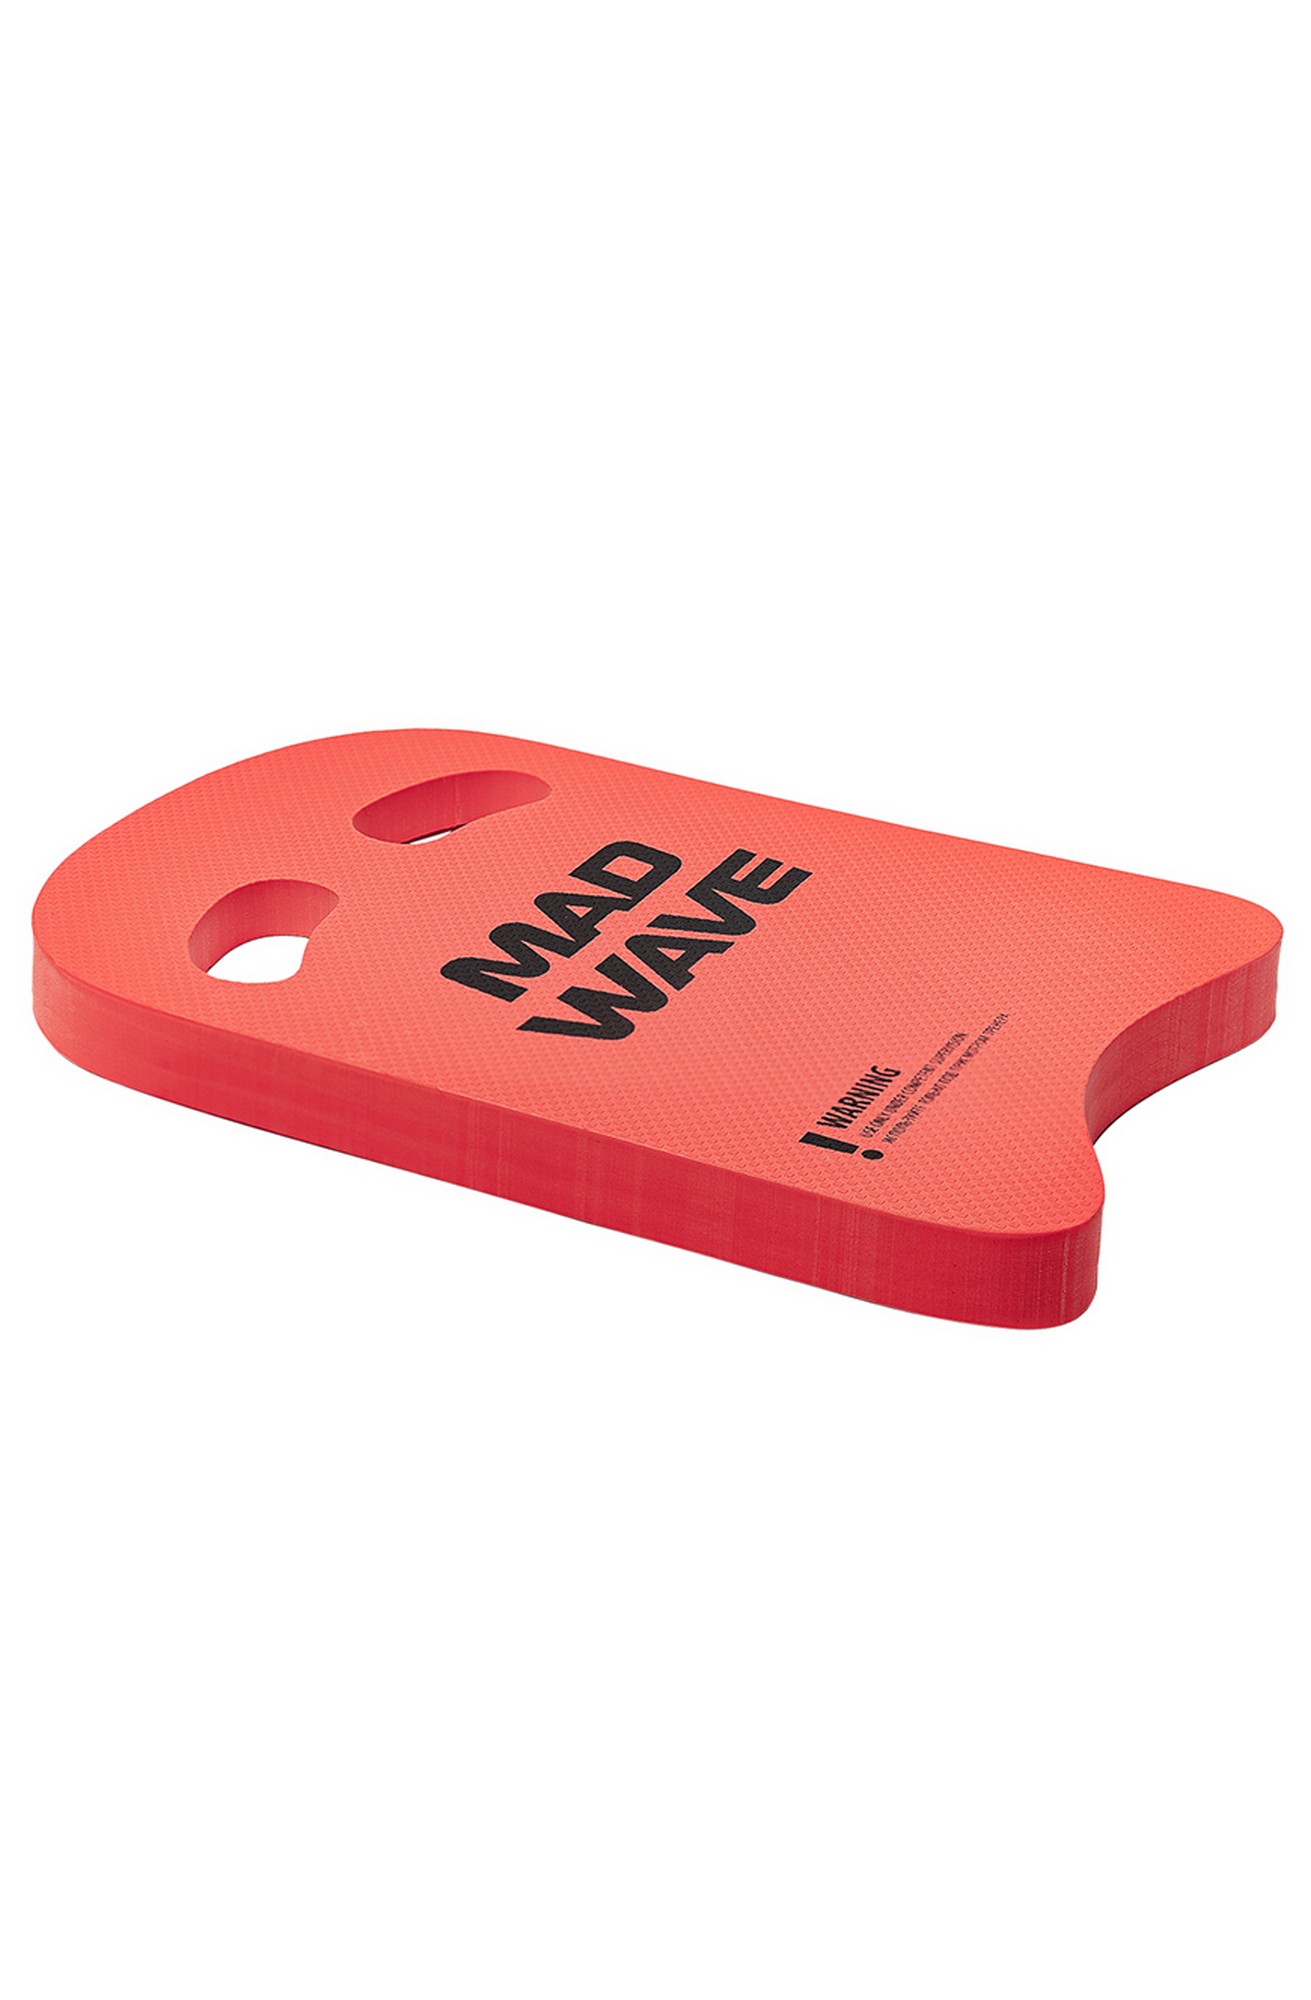 Доска для плавания Mad Wave Kickboard Light 35 M0721 03 0 05W 1311_2000